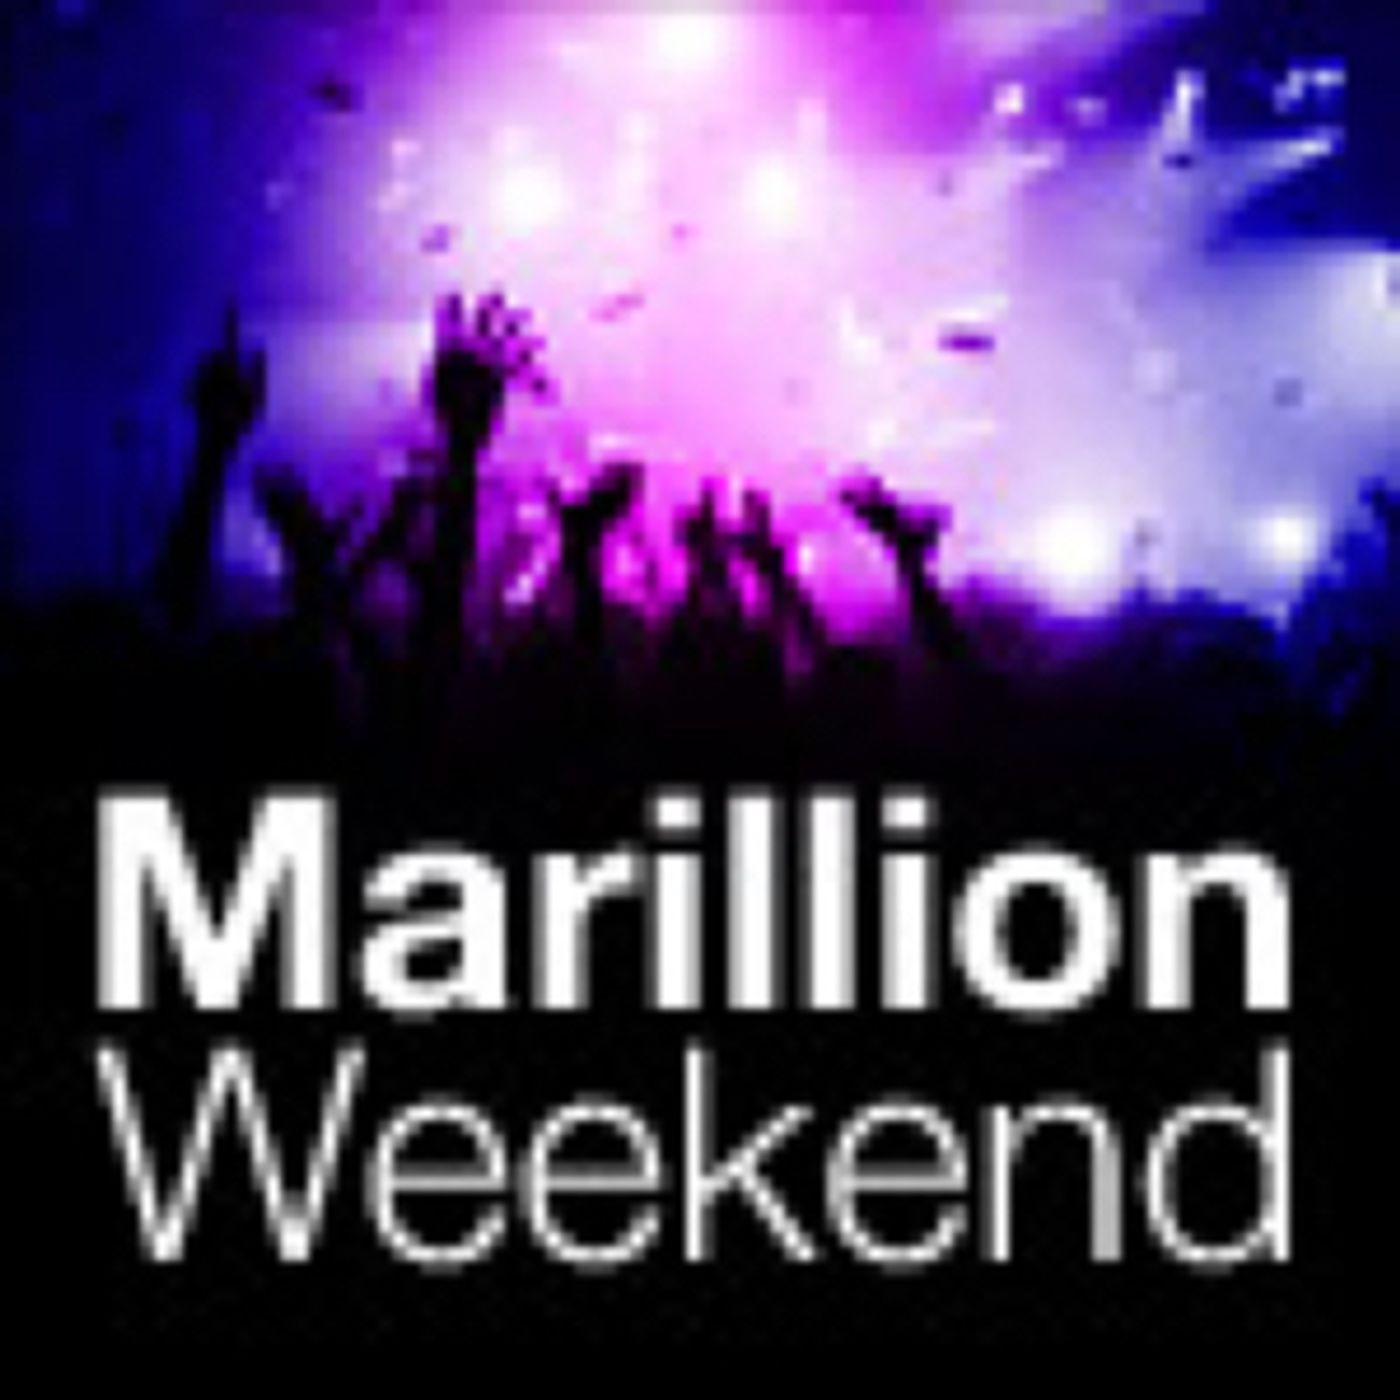 Marillion Weekend 2015